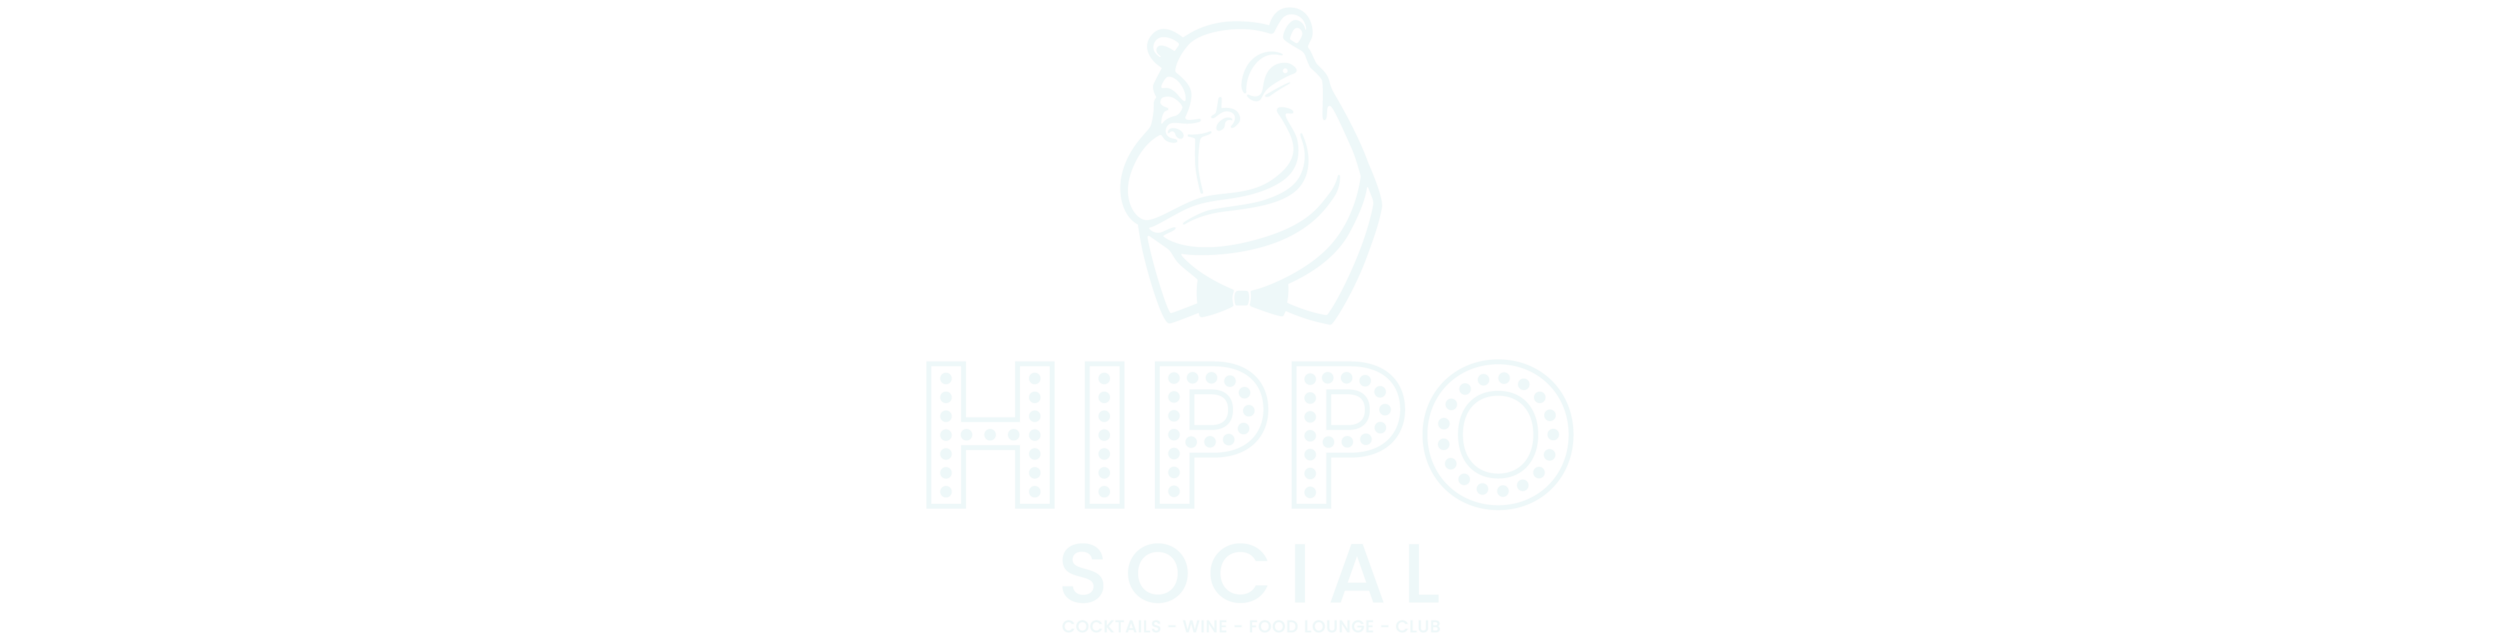 Hippo Social logo (web)-08.png